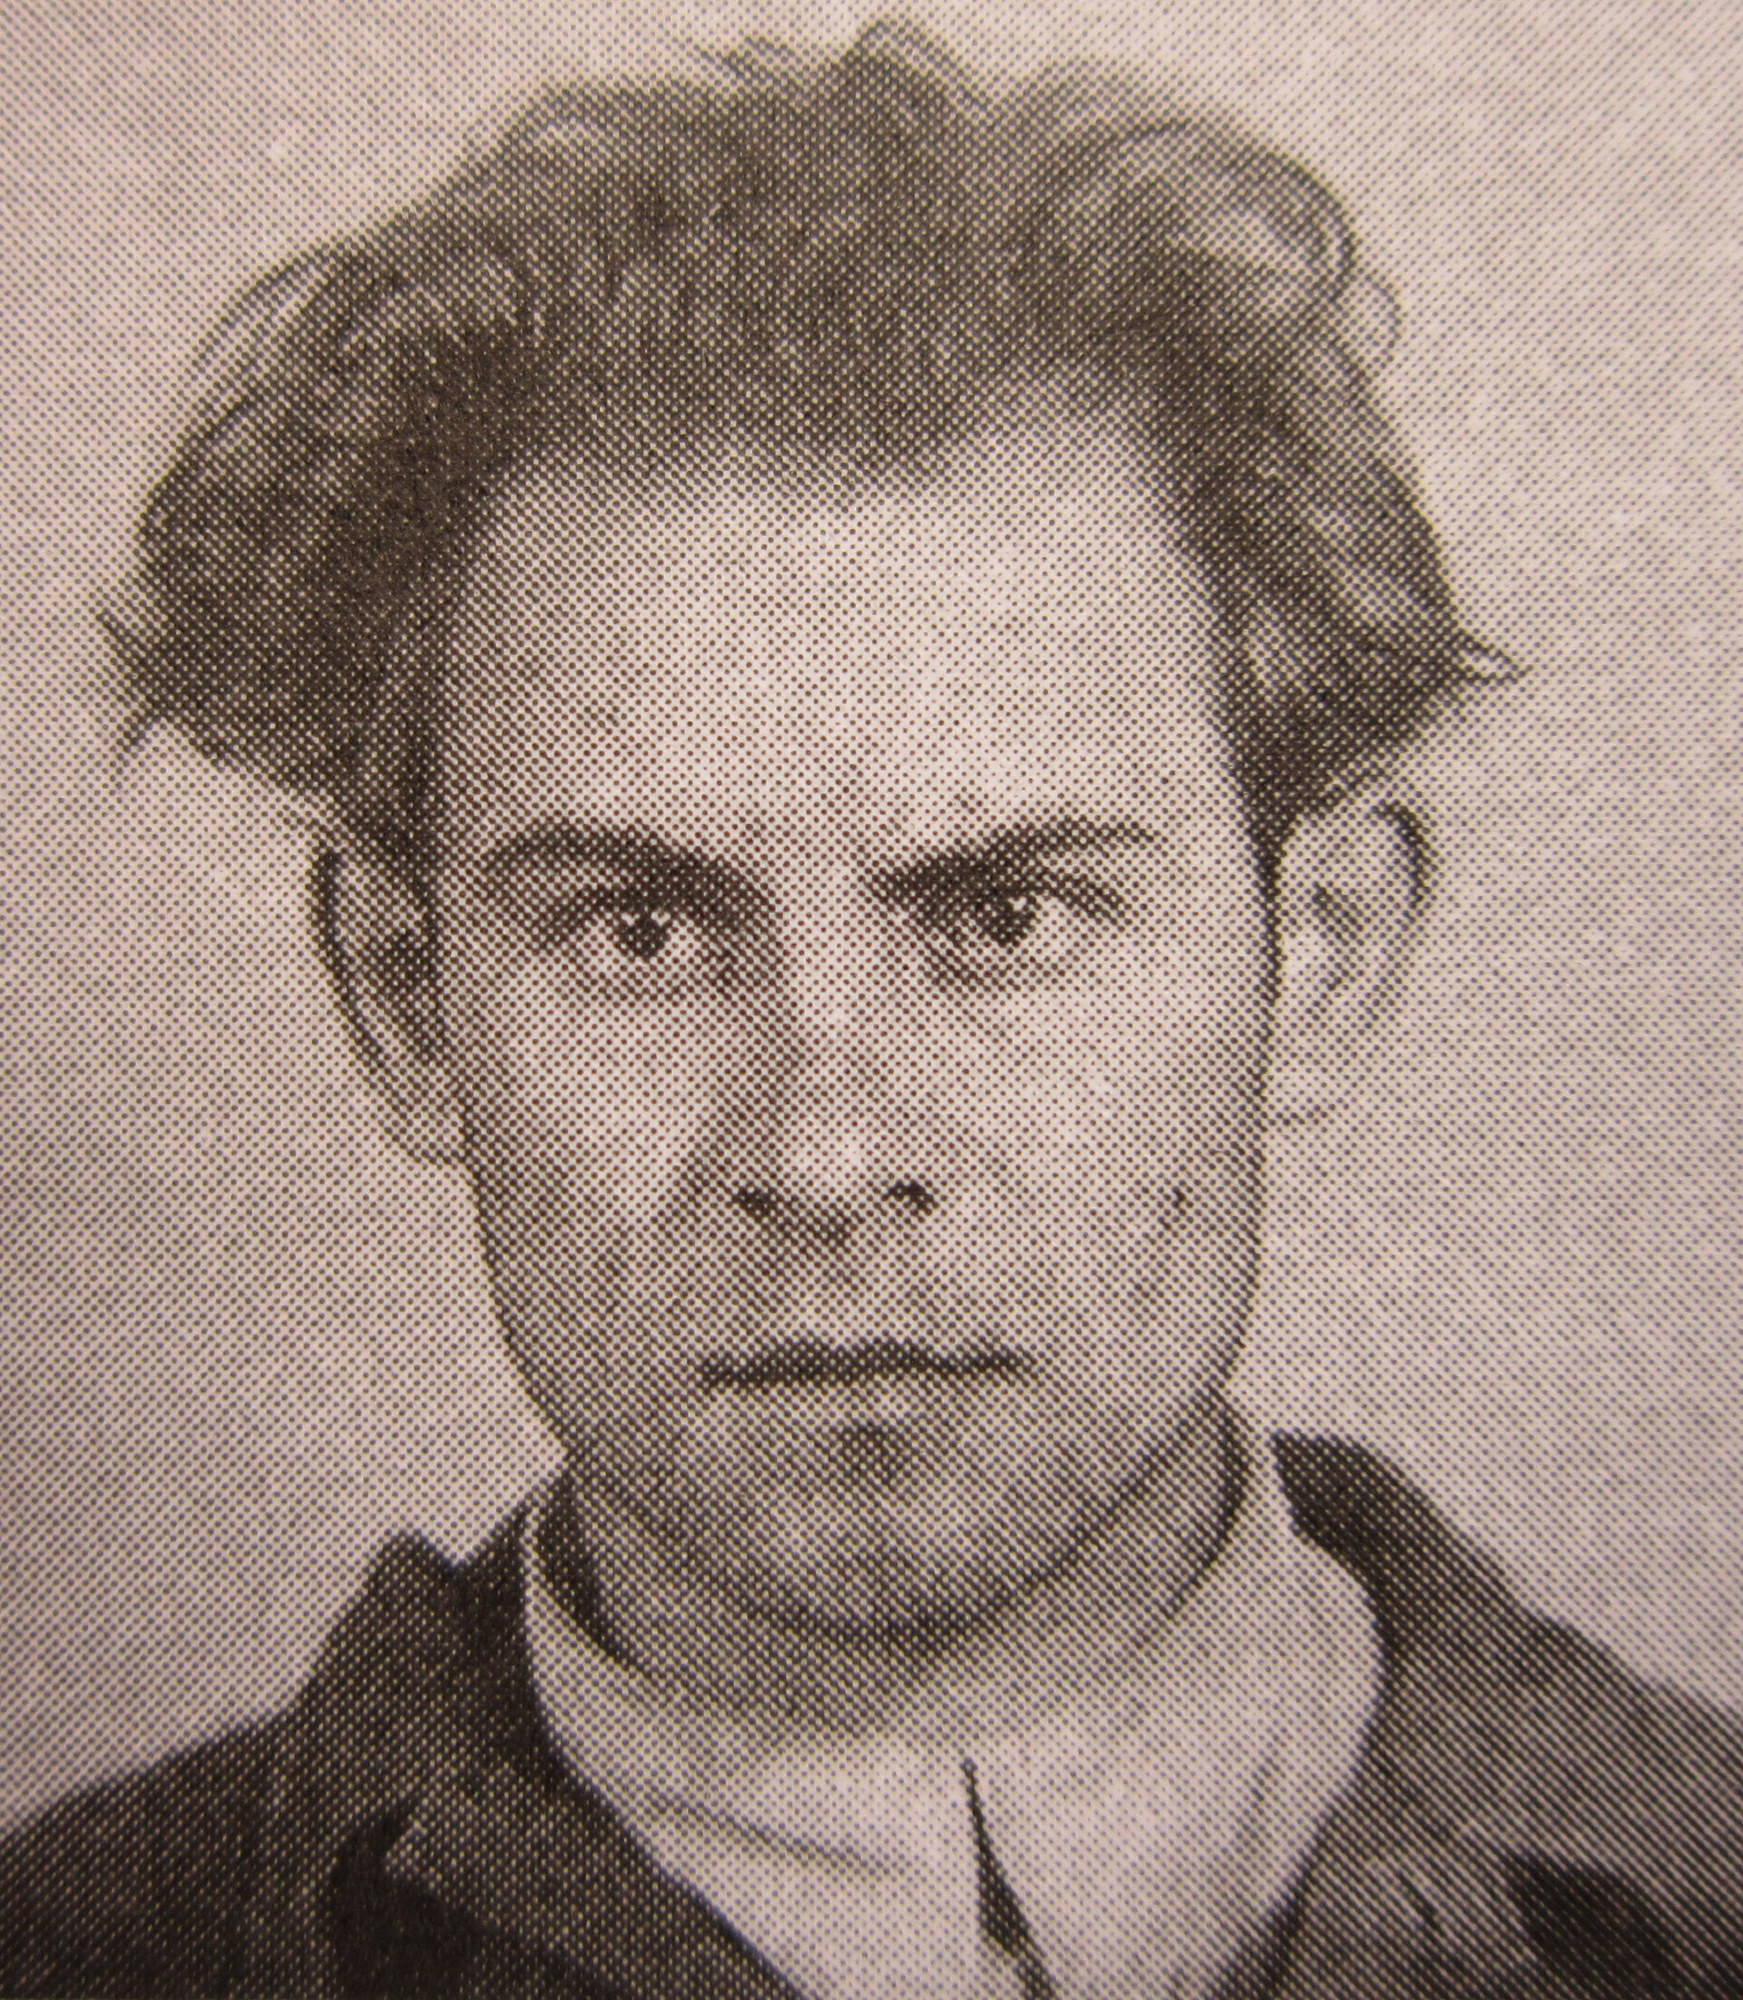 Mojmír Babušík in custody